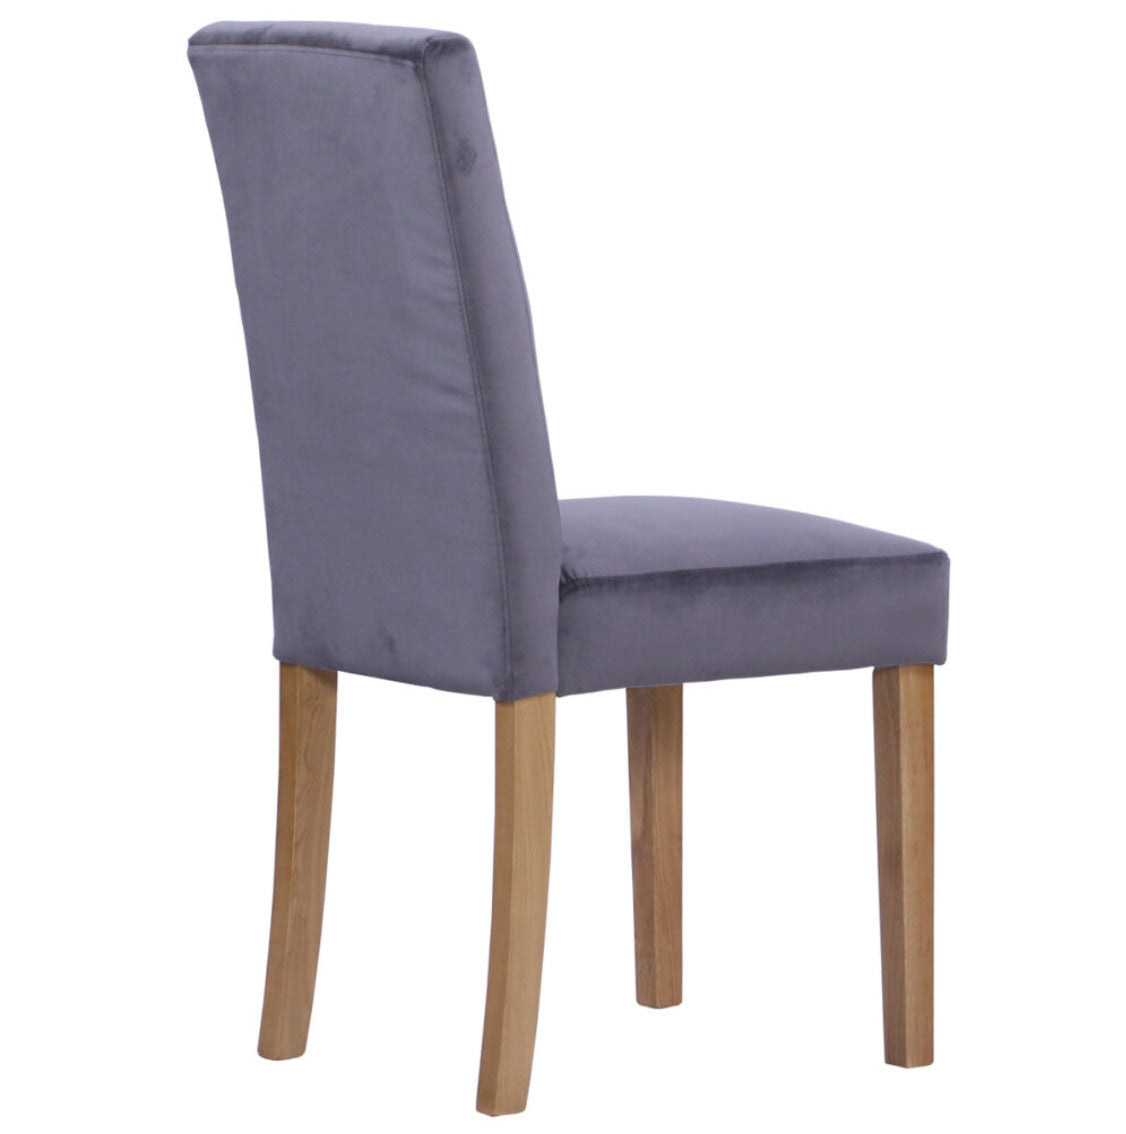 Manor Collection Ashbury Velvet Chair